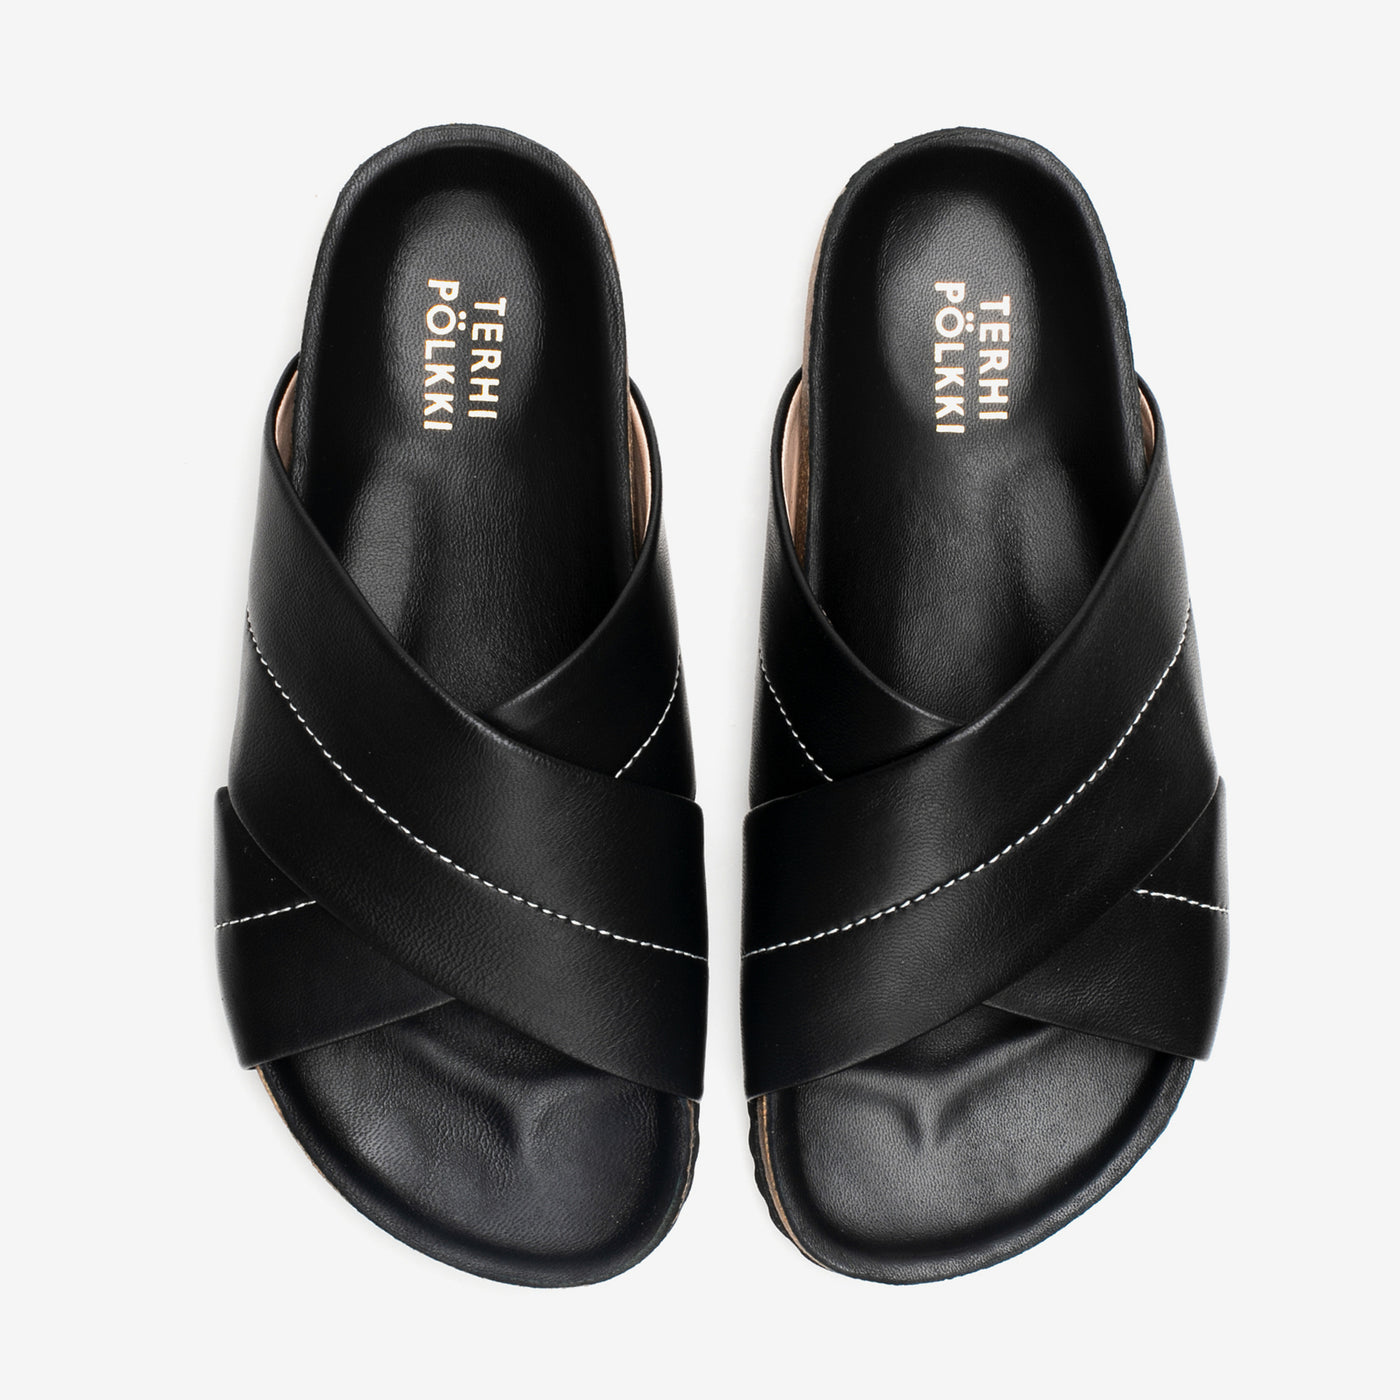 Vera fussbett sandal black